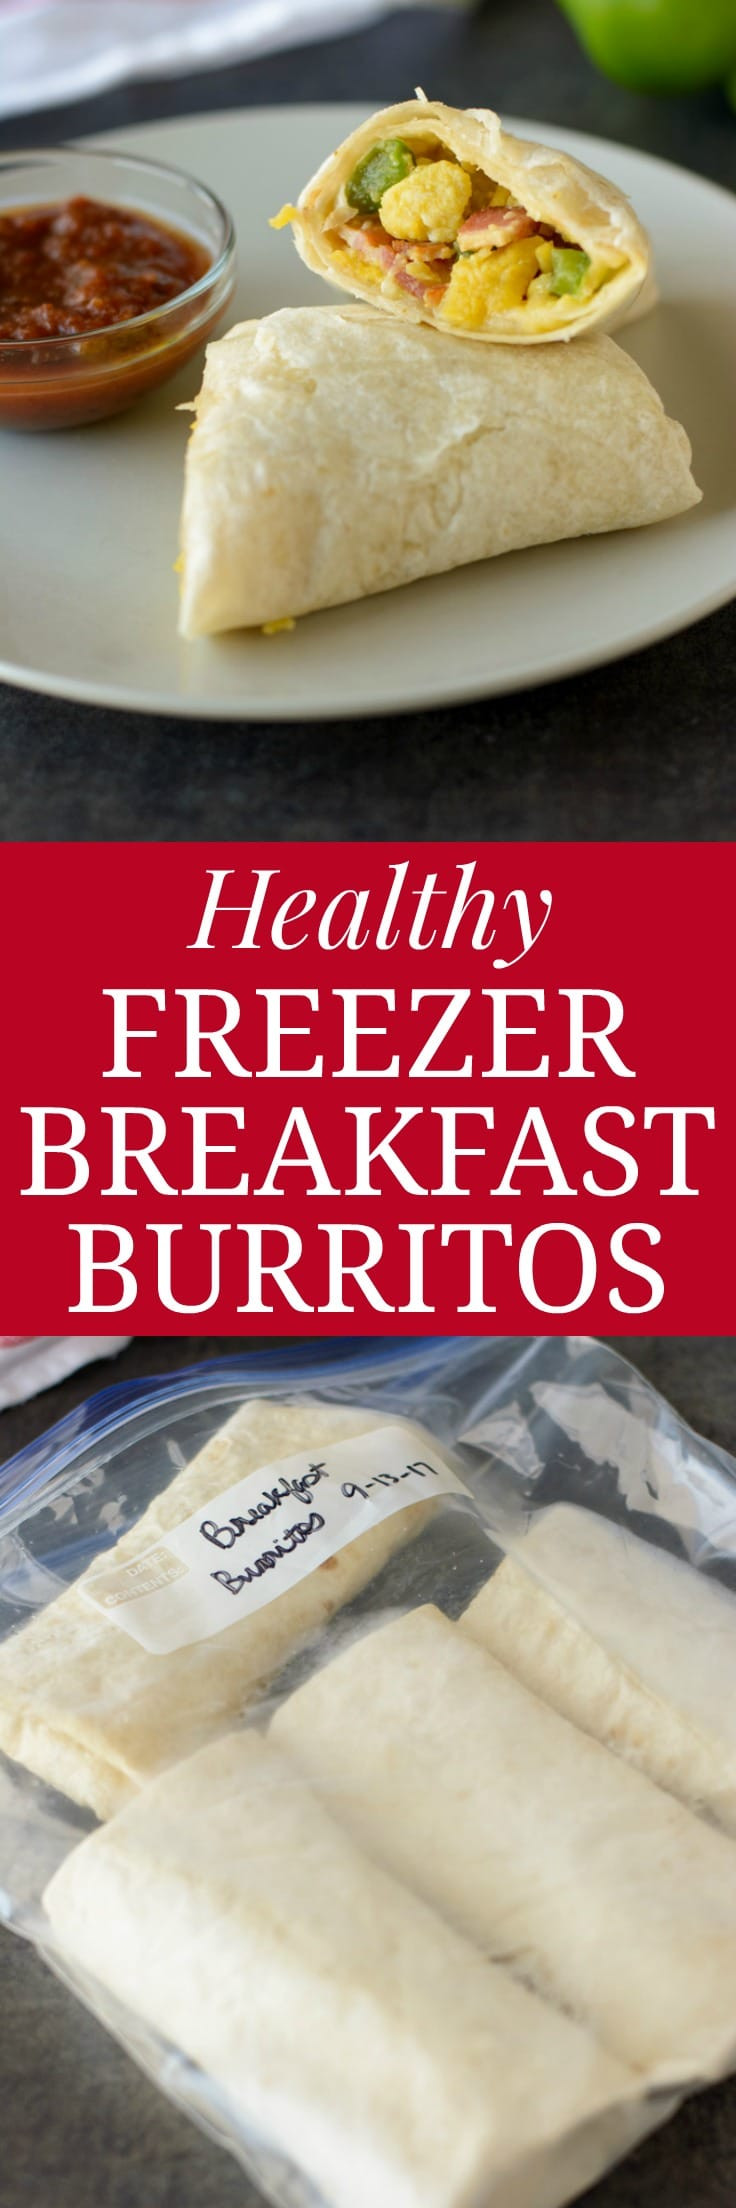 Make Ahead Healthy Breakfast Burritos
 Healthy Freezer Breakfast Burritos Healthier Dishes